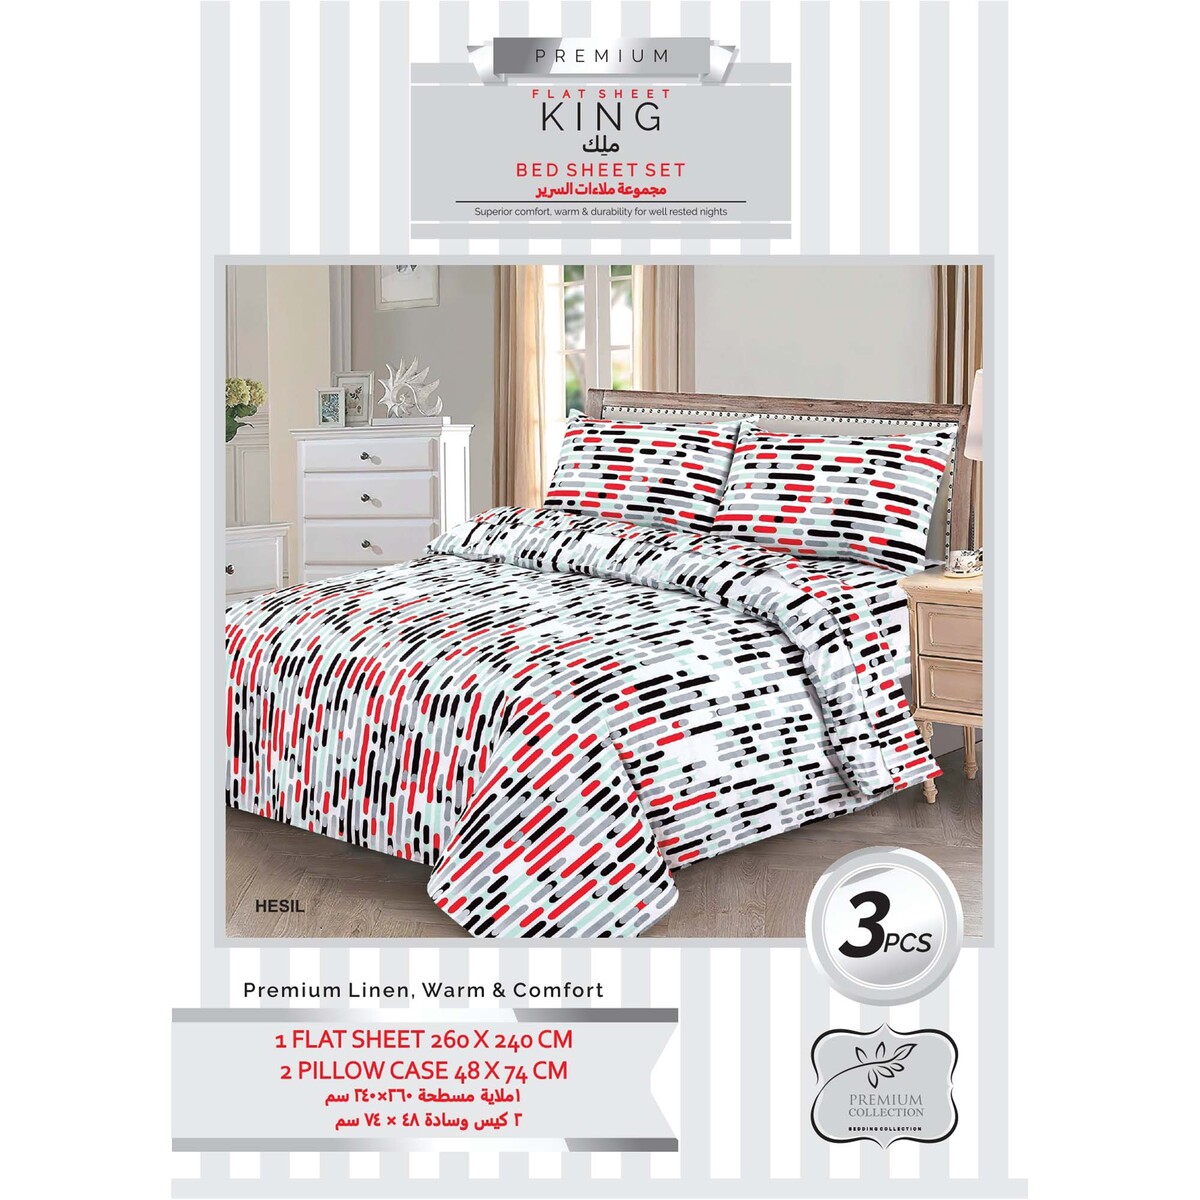 Decora Premium Bed Sheet King (260x240cm) 3pcs Set